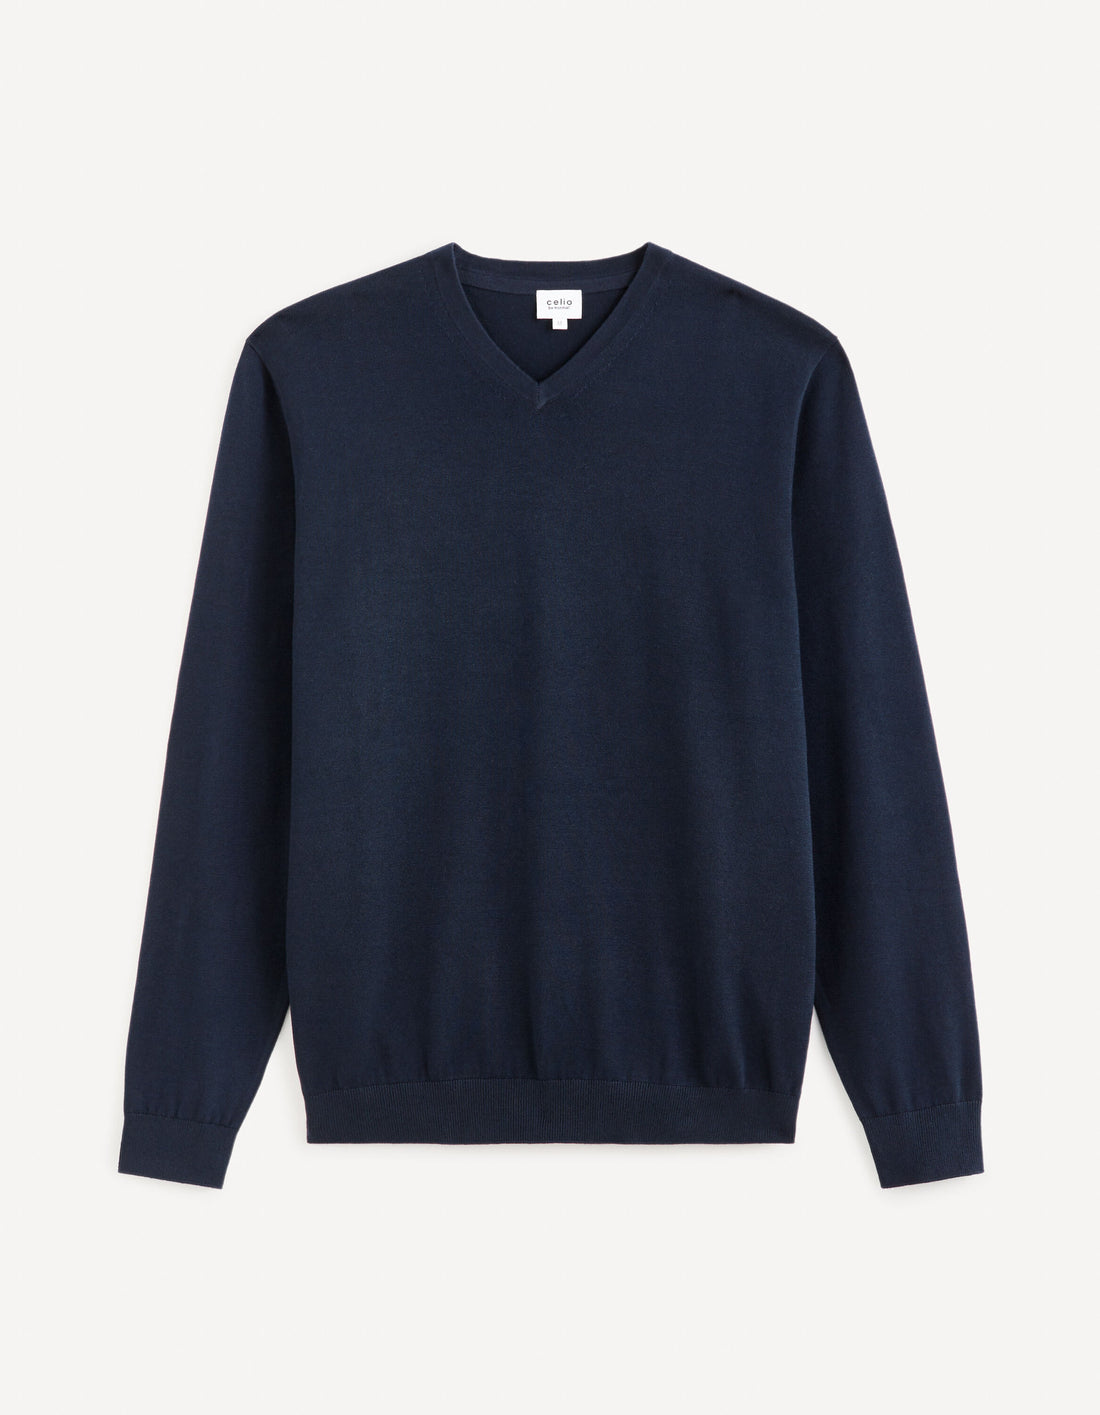 100% Cotton V-Neck Sweater - Navy_DECOTON_NAVY_02